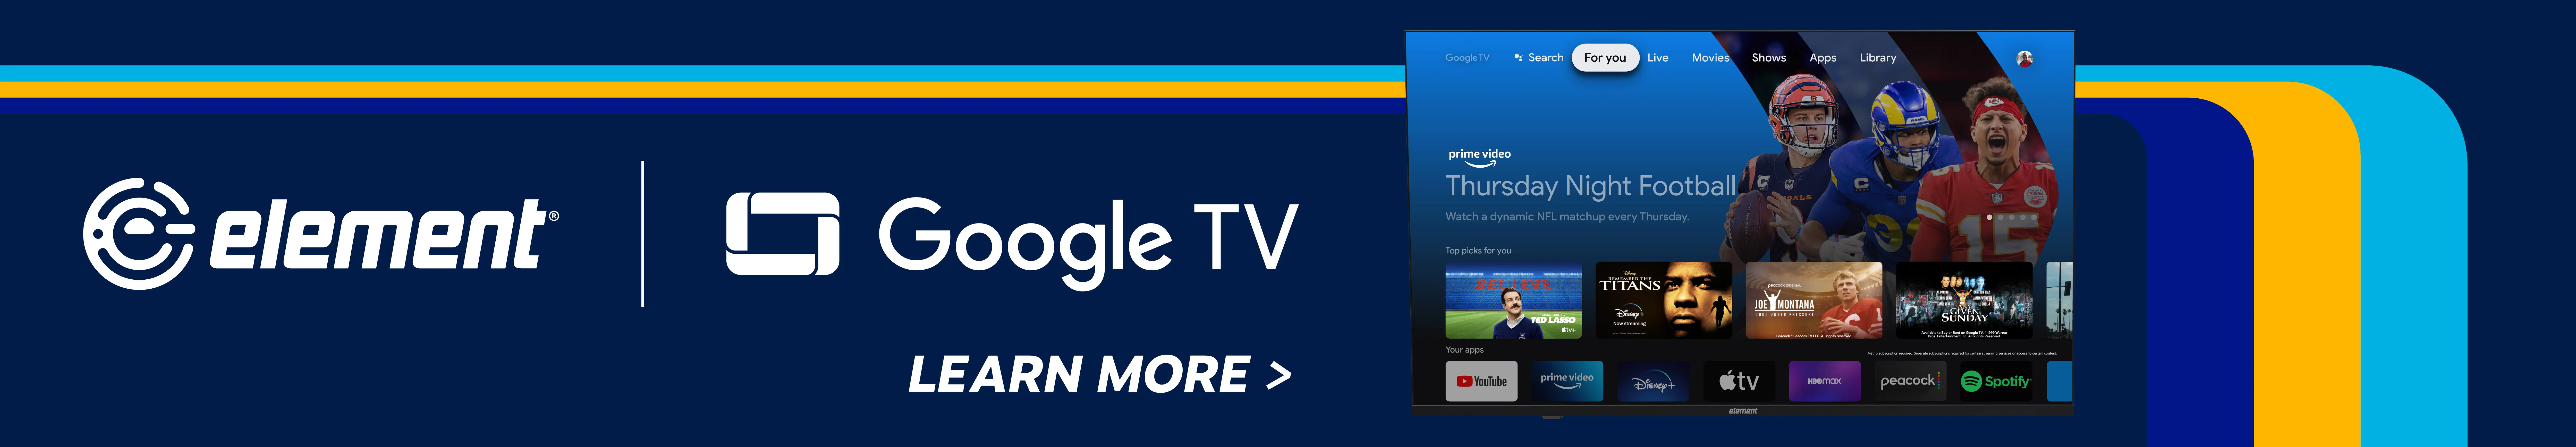 Google TV smart platform